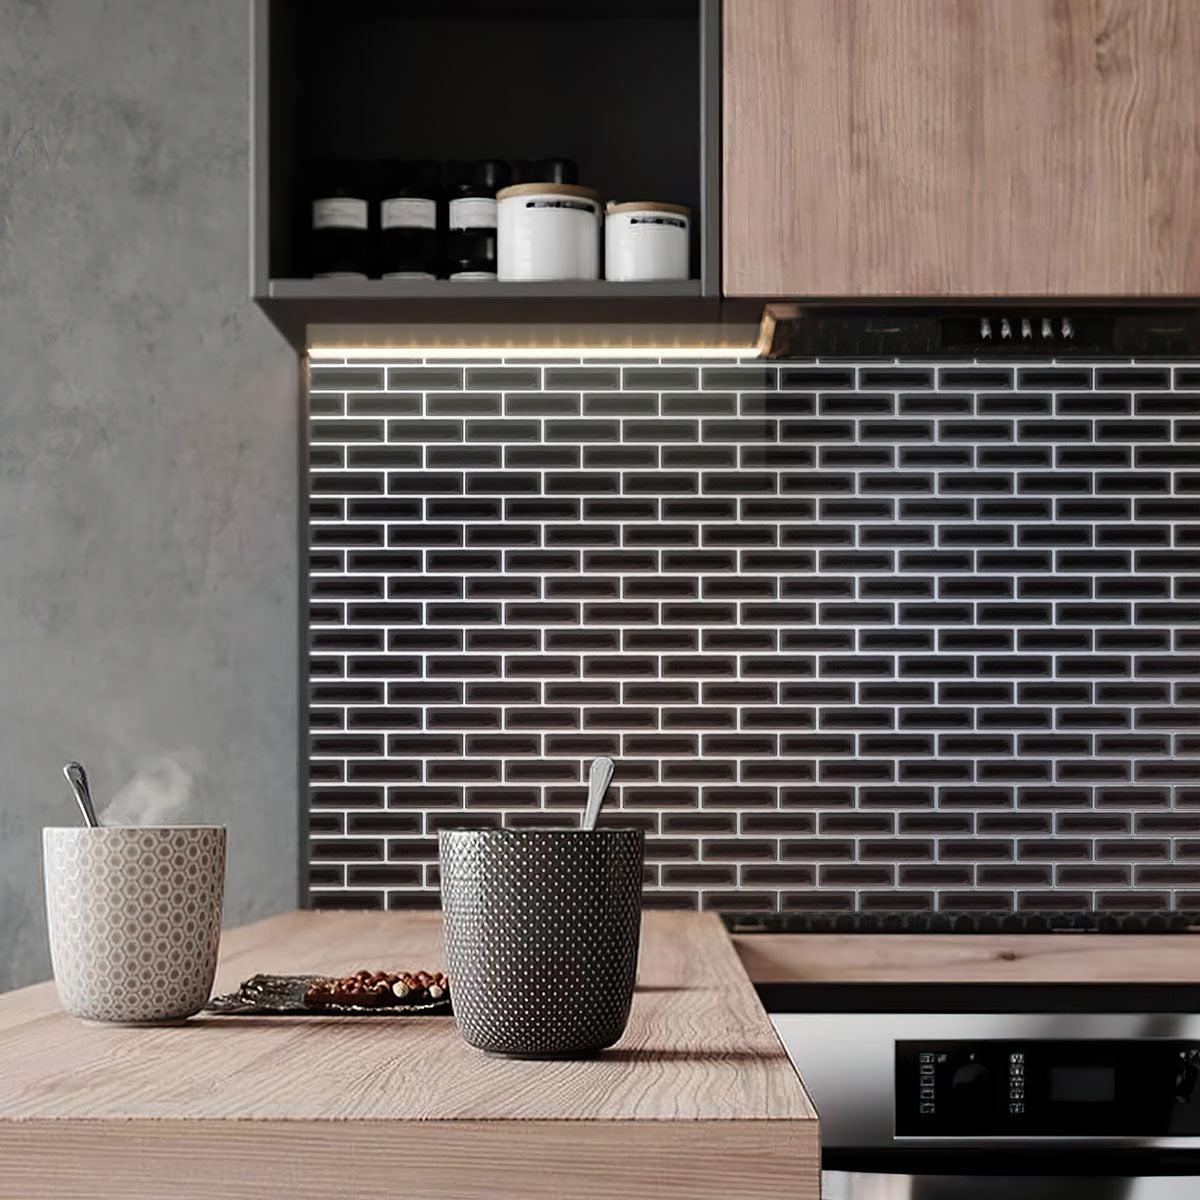 Wood & grey kitchen with Obsidian Black Glass Brick Tile backsplash